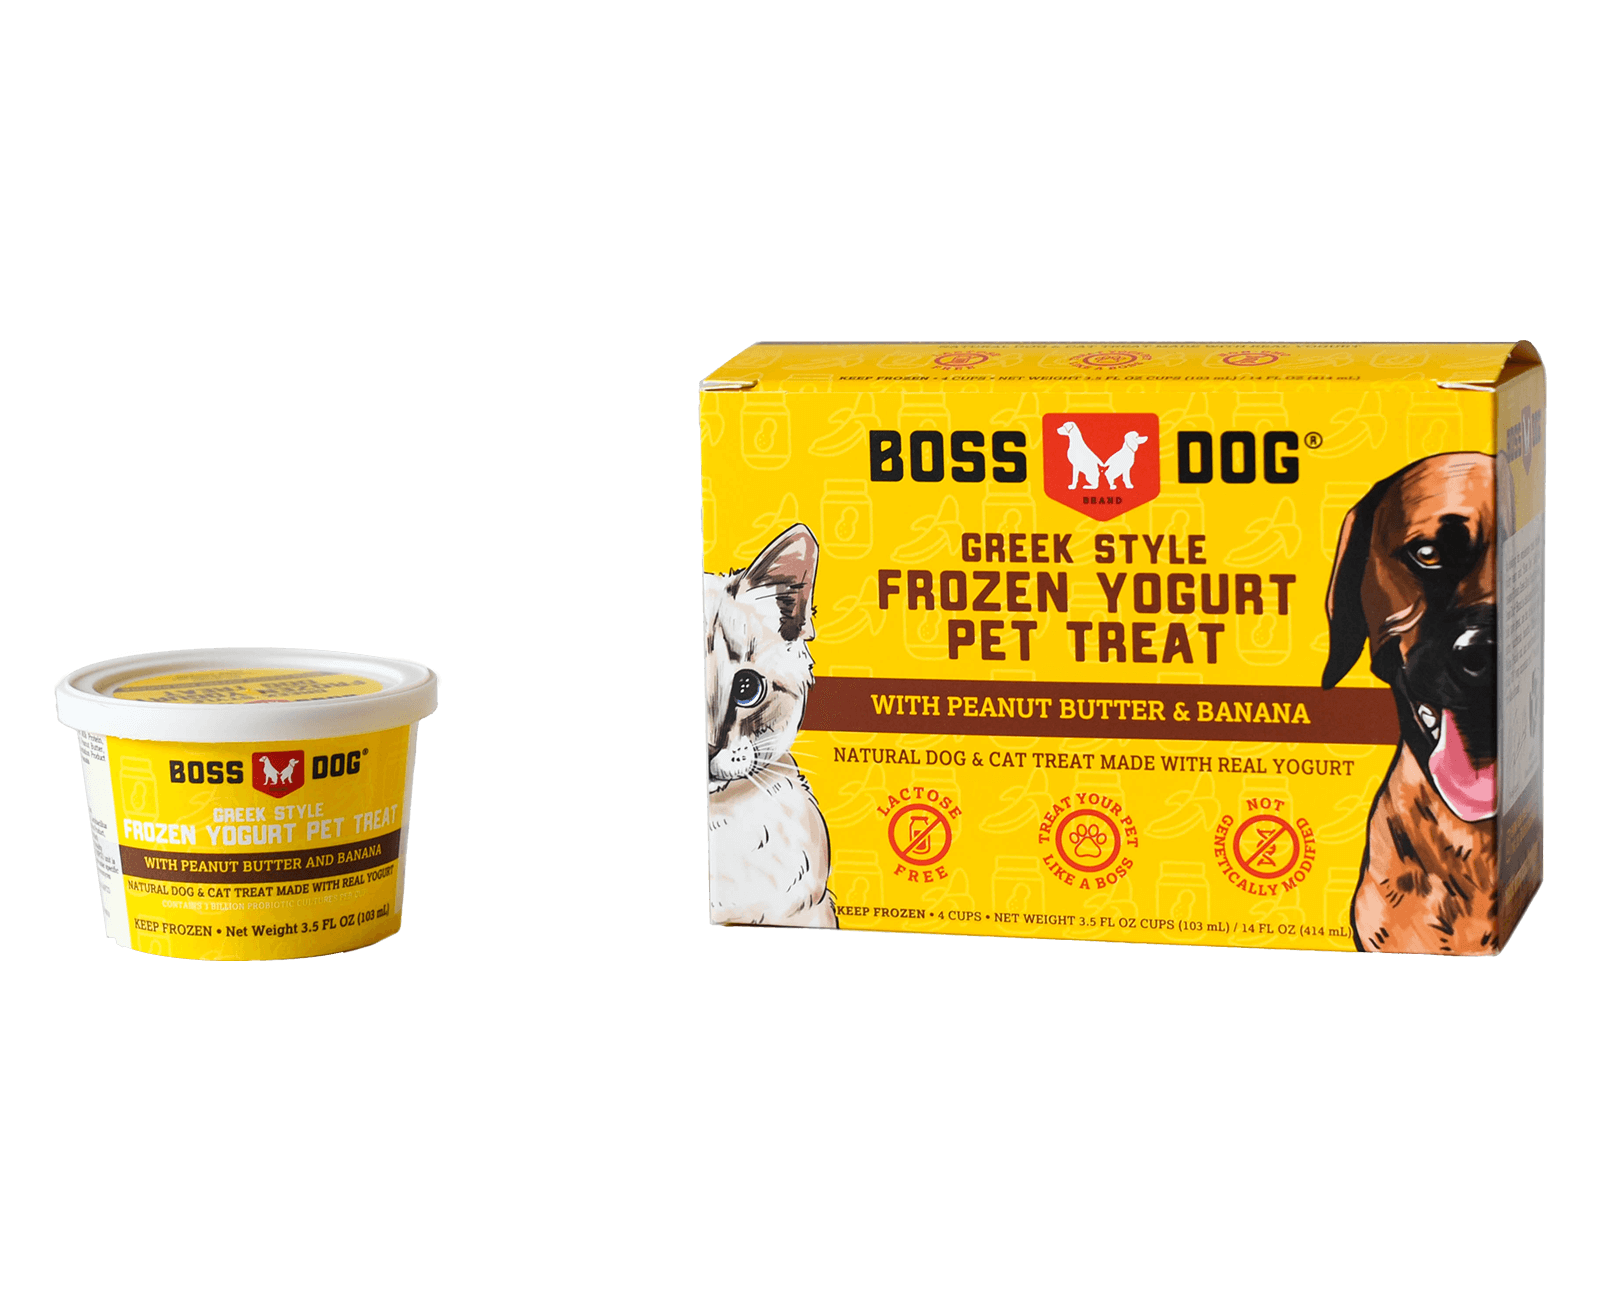 Boss Dog Greek Style Frozen Yogurt -  Peanut Butter & Banana Pet Treat